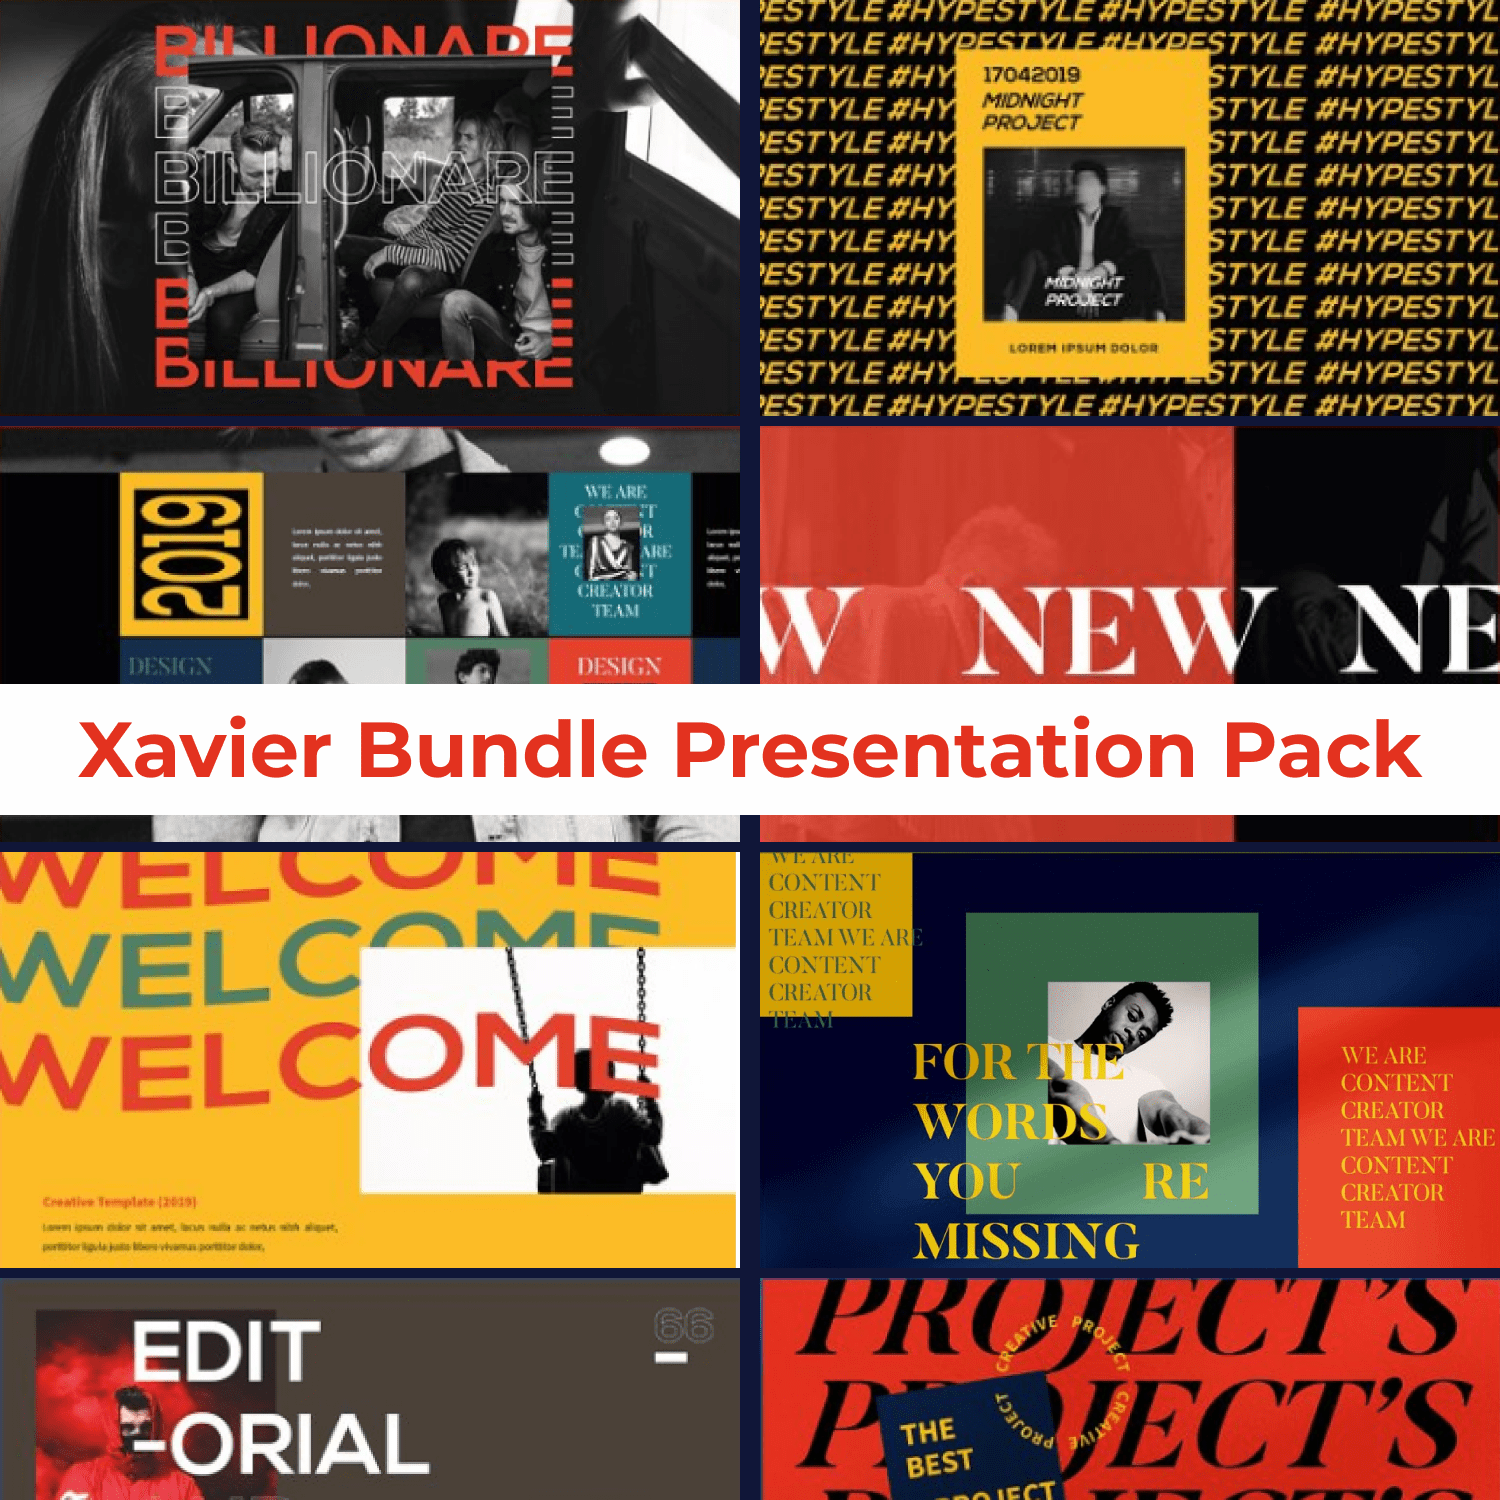 Xavier Bundle Presentation Pack main cover.